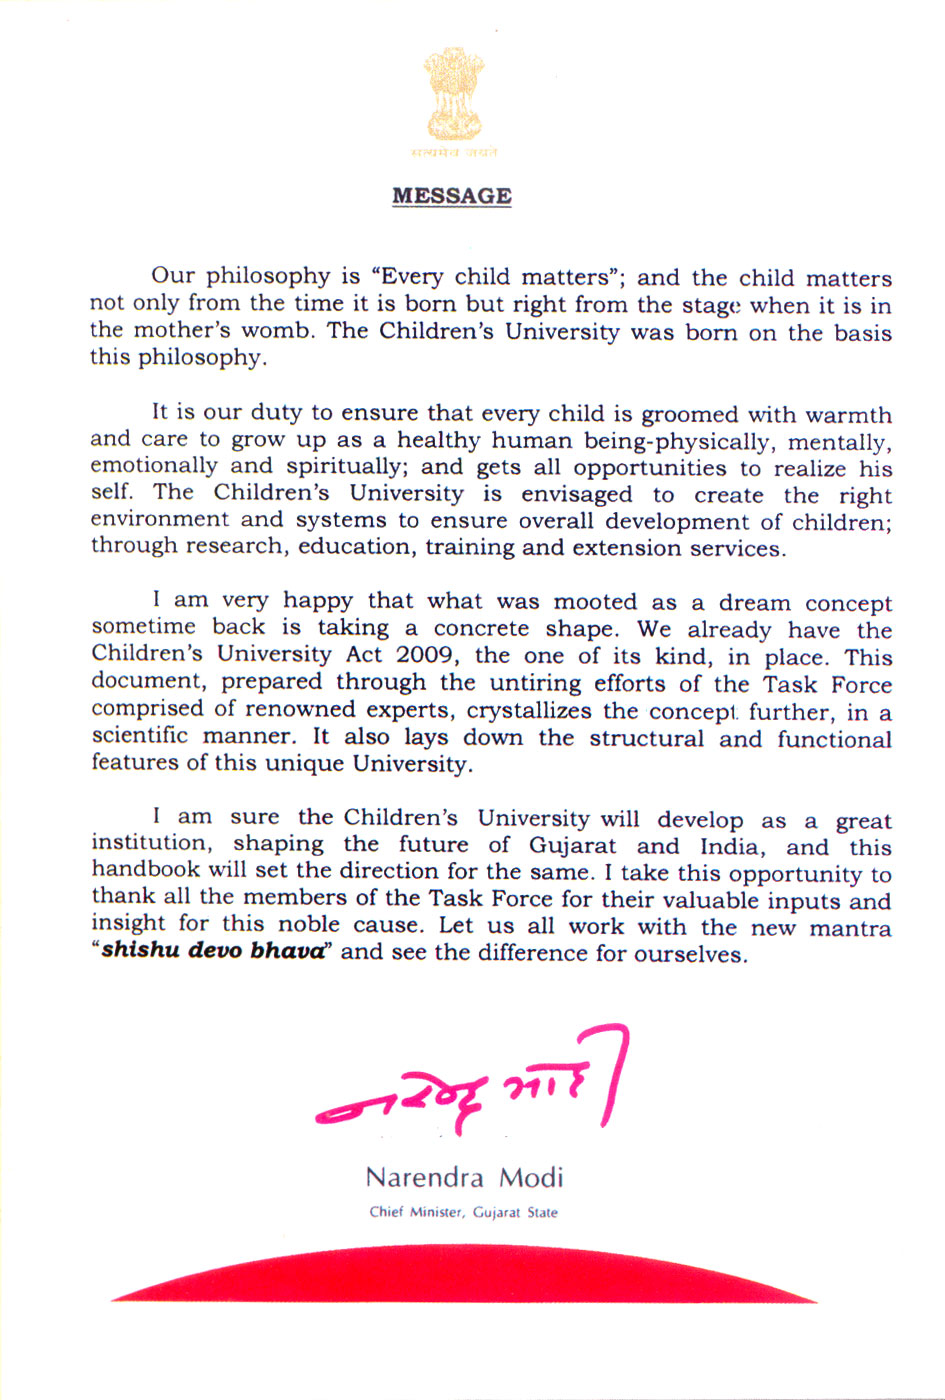 Chidlren's University - Message - by Narendra Modi, Chief Minister Gujarat